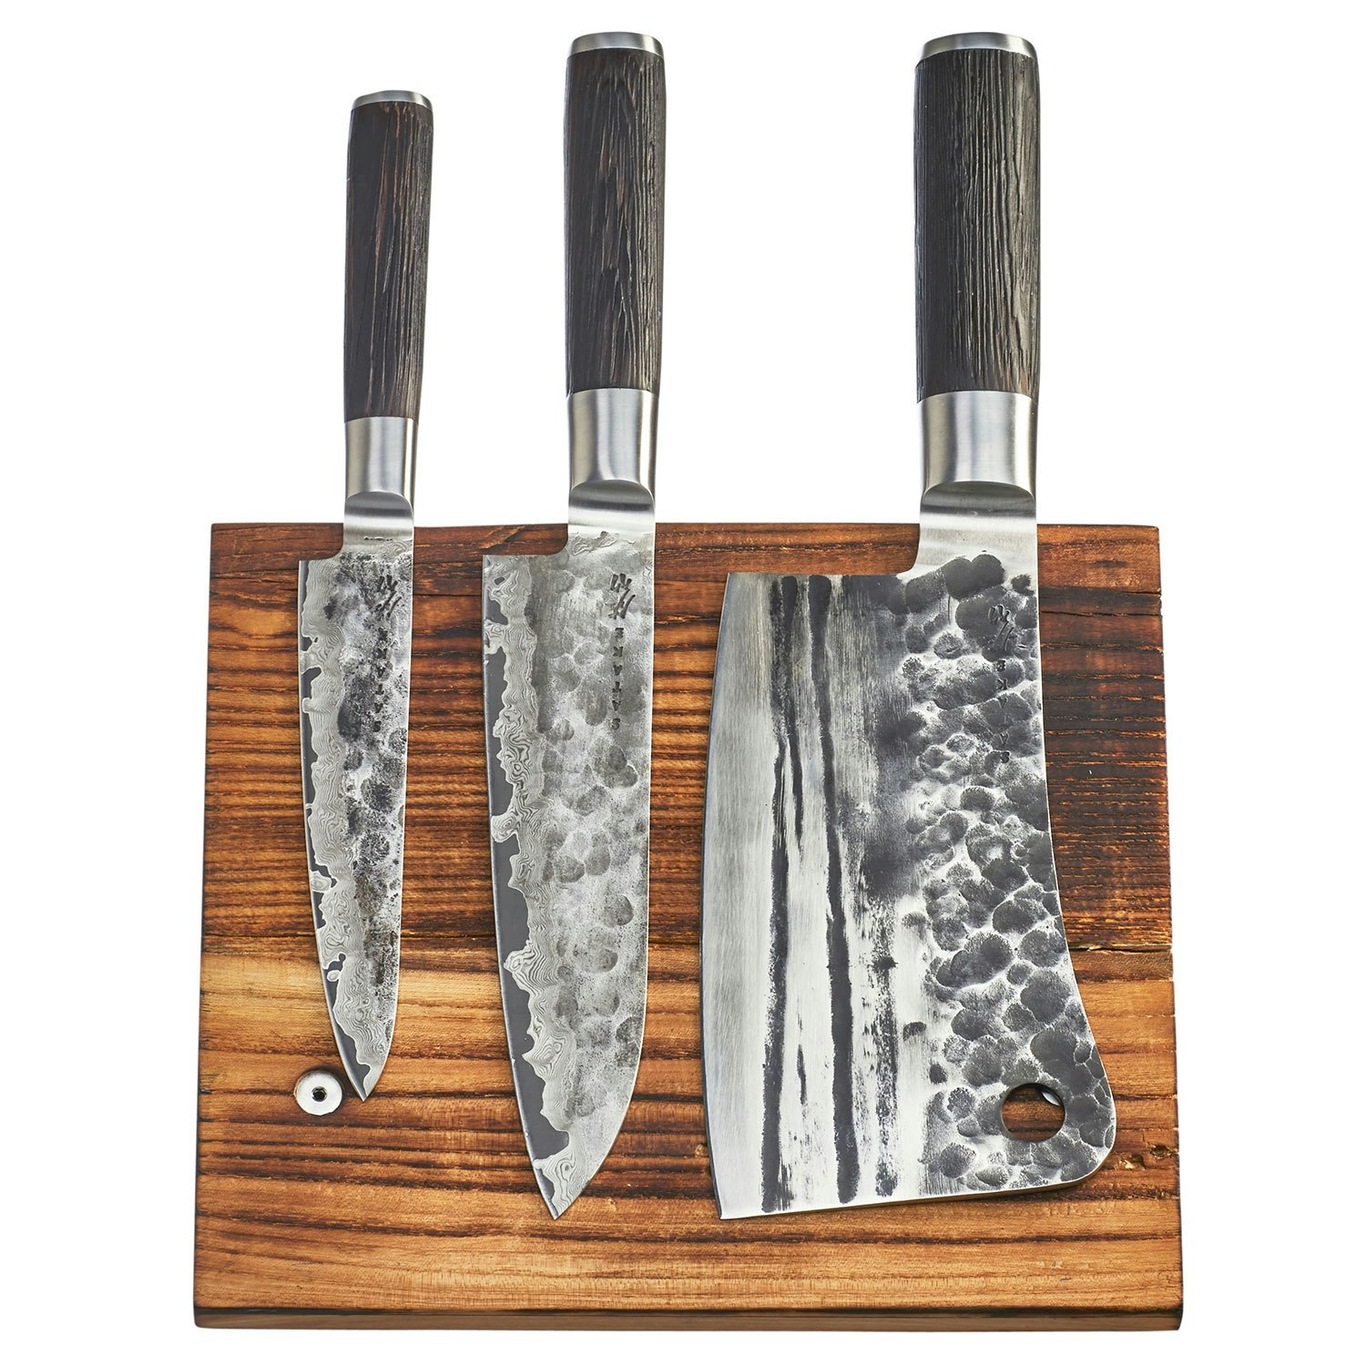 Wooden Knife Holder Wooden Knife Stand Wooden Knife Block Rustic